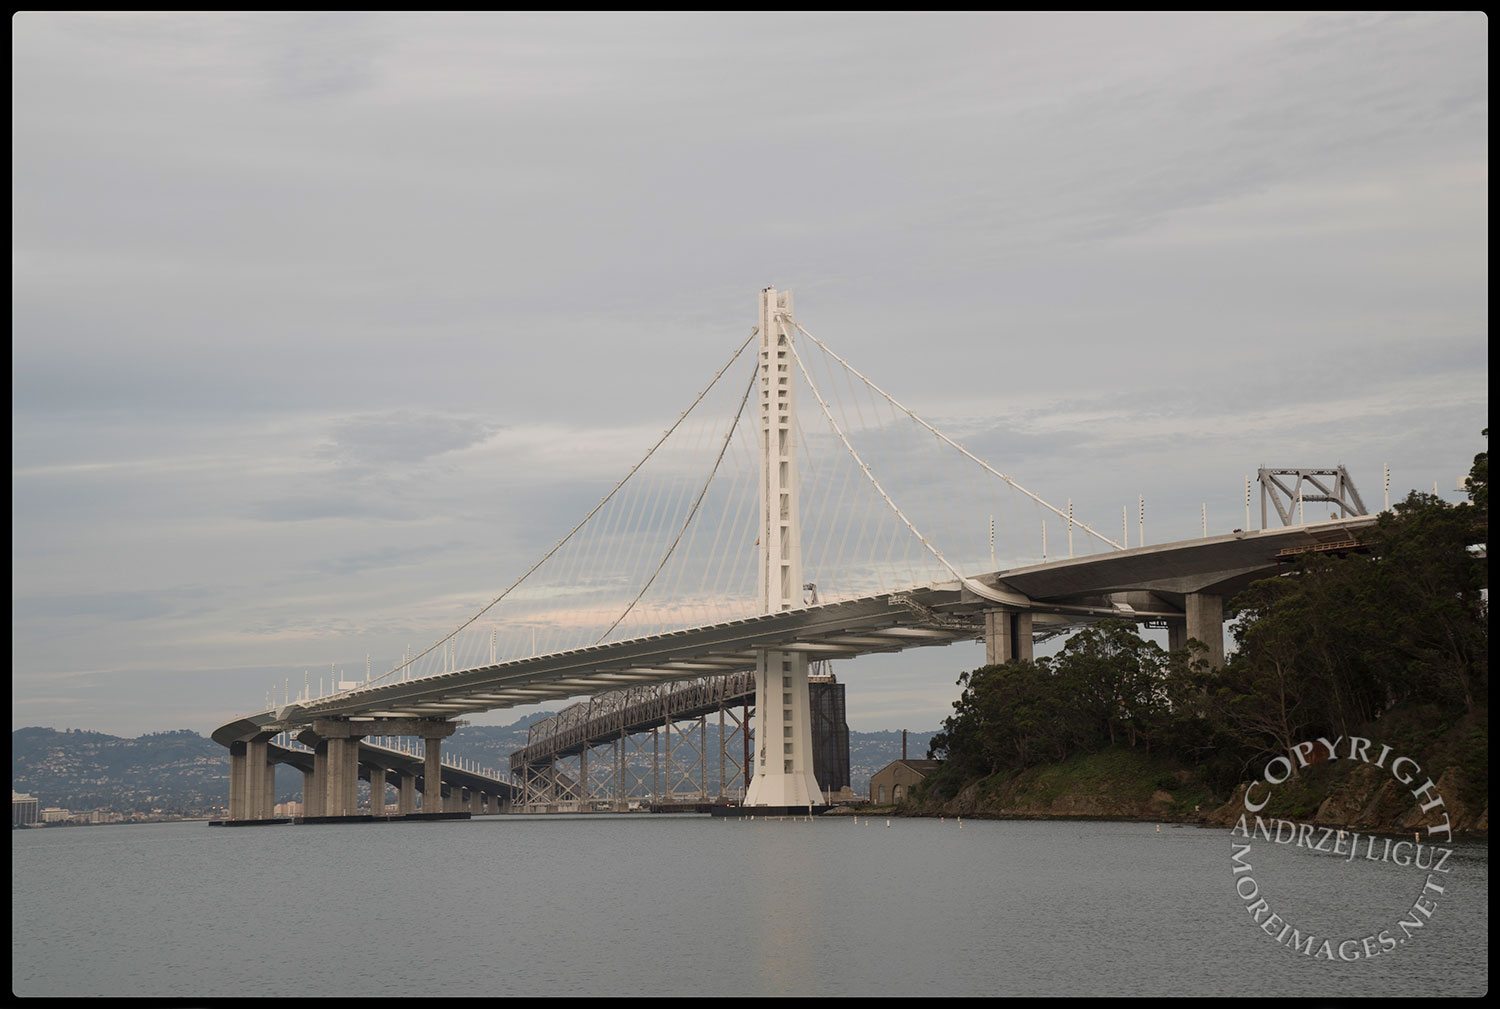 The Bay Bridge, San Francisco Bay, CA 2015-03-14